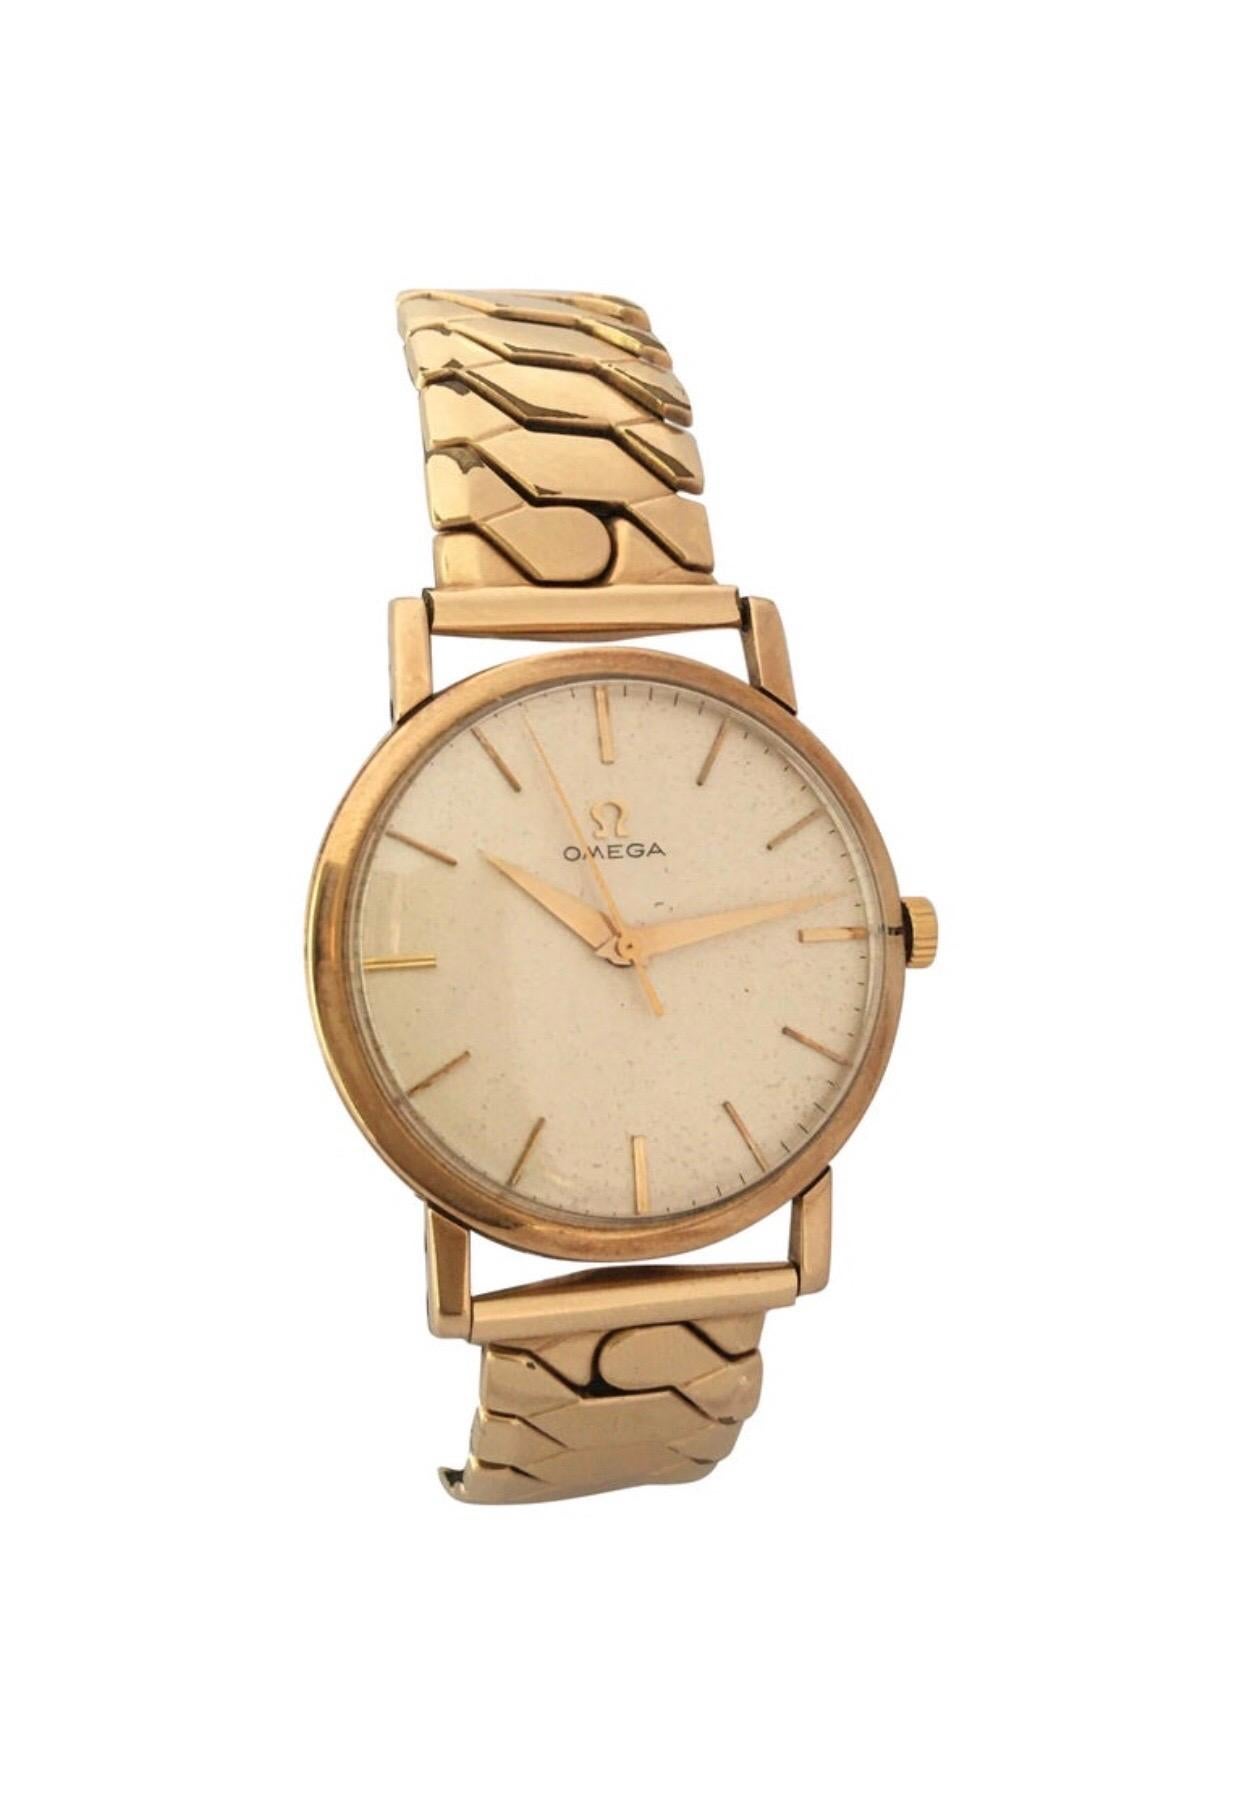 9 Karat Gold and Rolled Gold Bracelet 1960s Omega Mechanical Watch For Sale 13